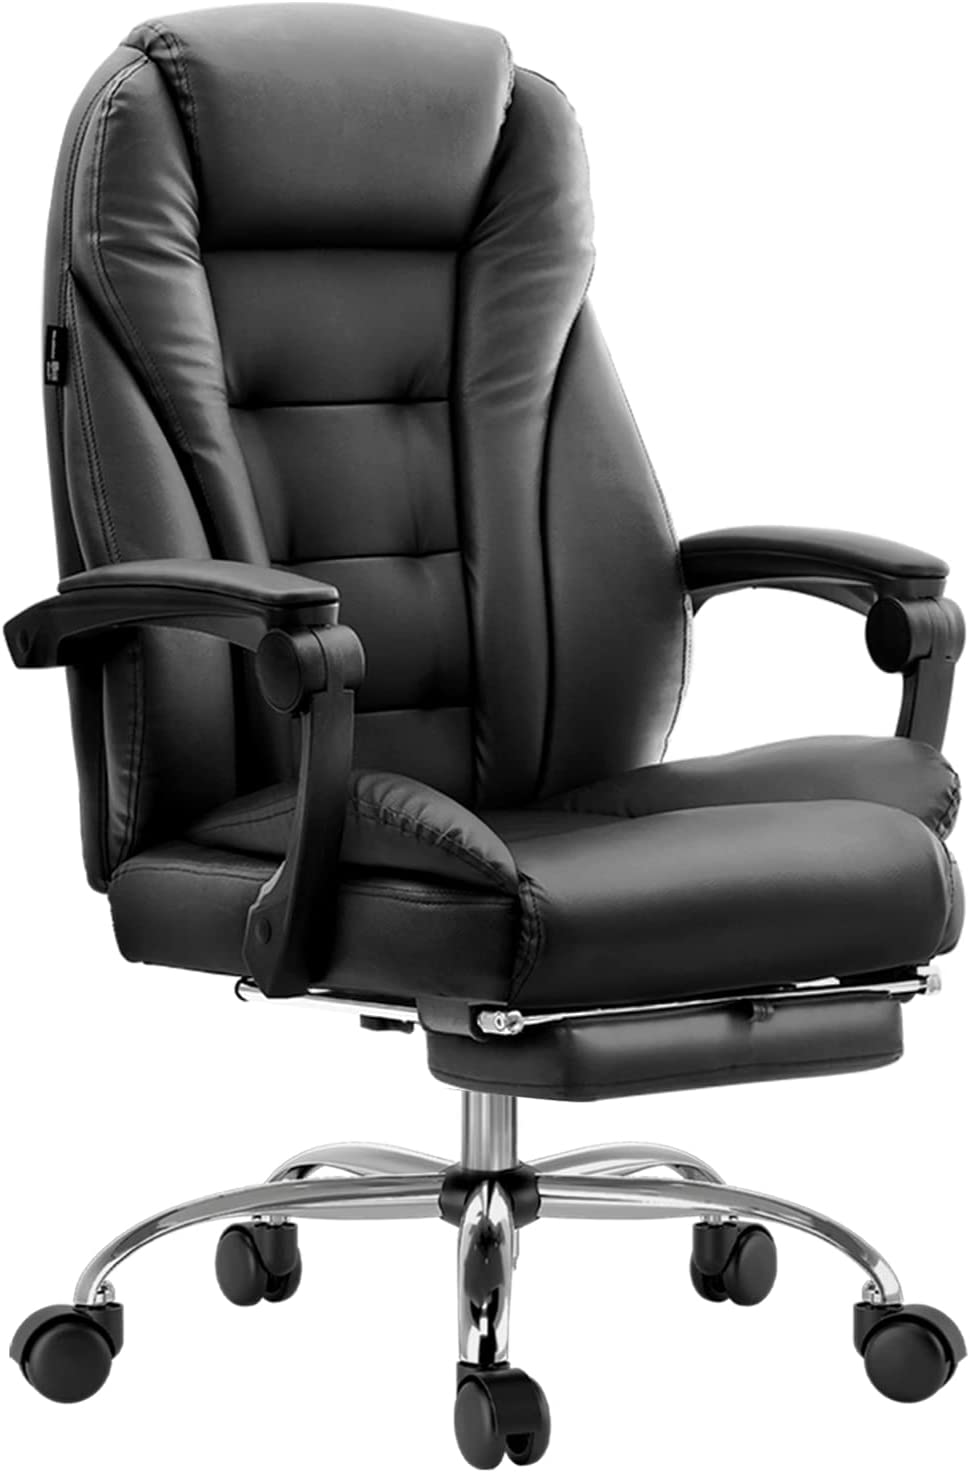 Hbada High-Back Upholstered Executive Desk Chair